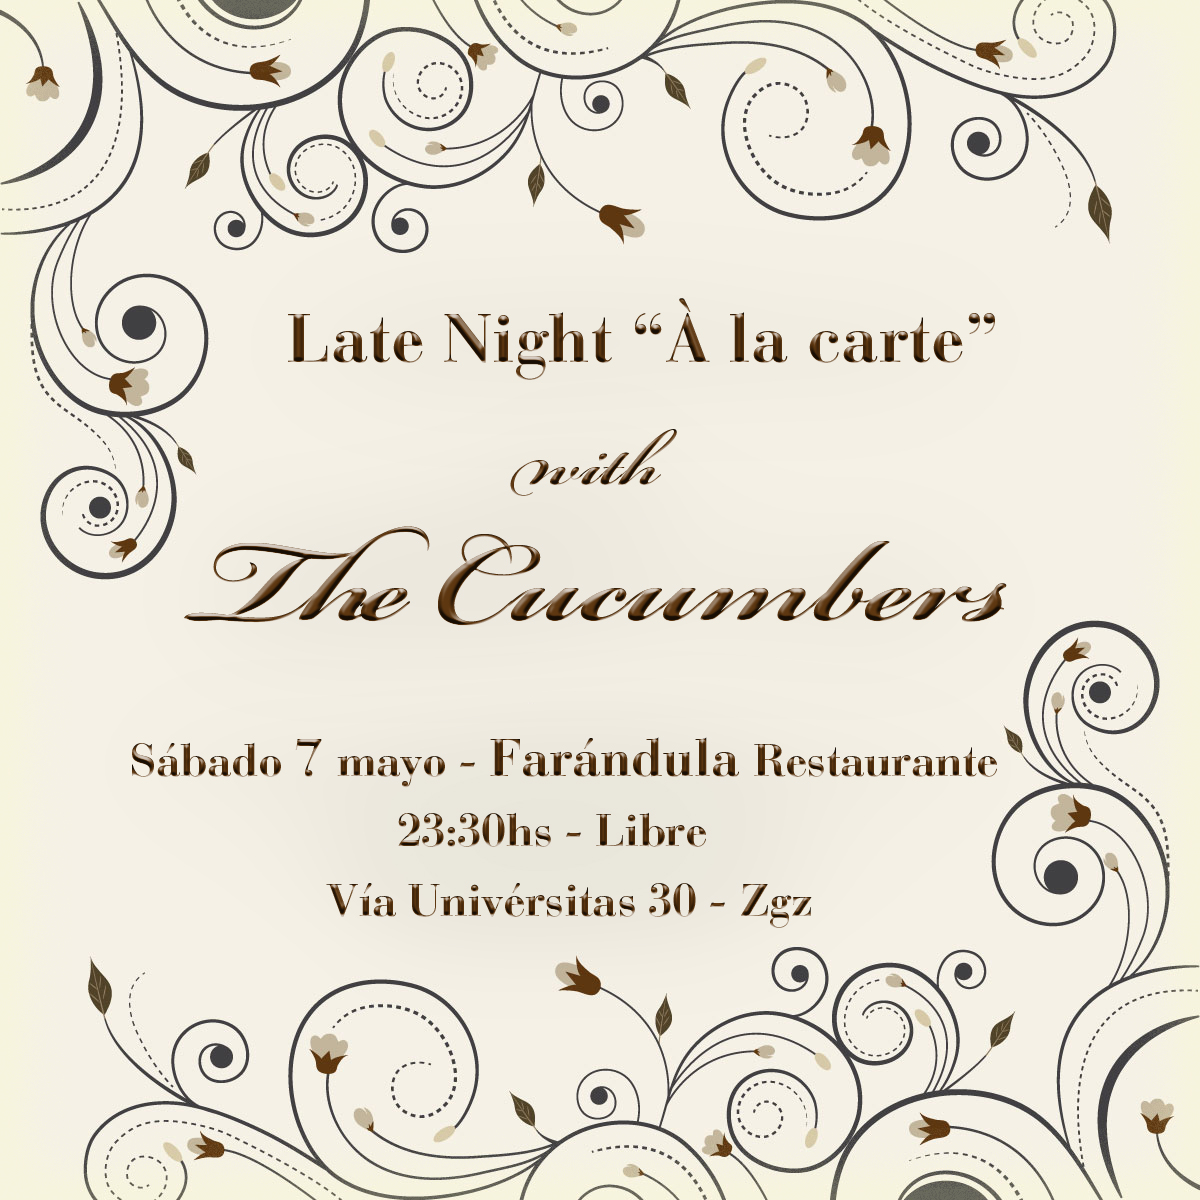 7 de mayo (sábado) «Late Night with The Cucumbers» en Farándula Restaurante – 23:30hs